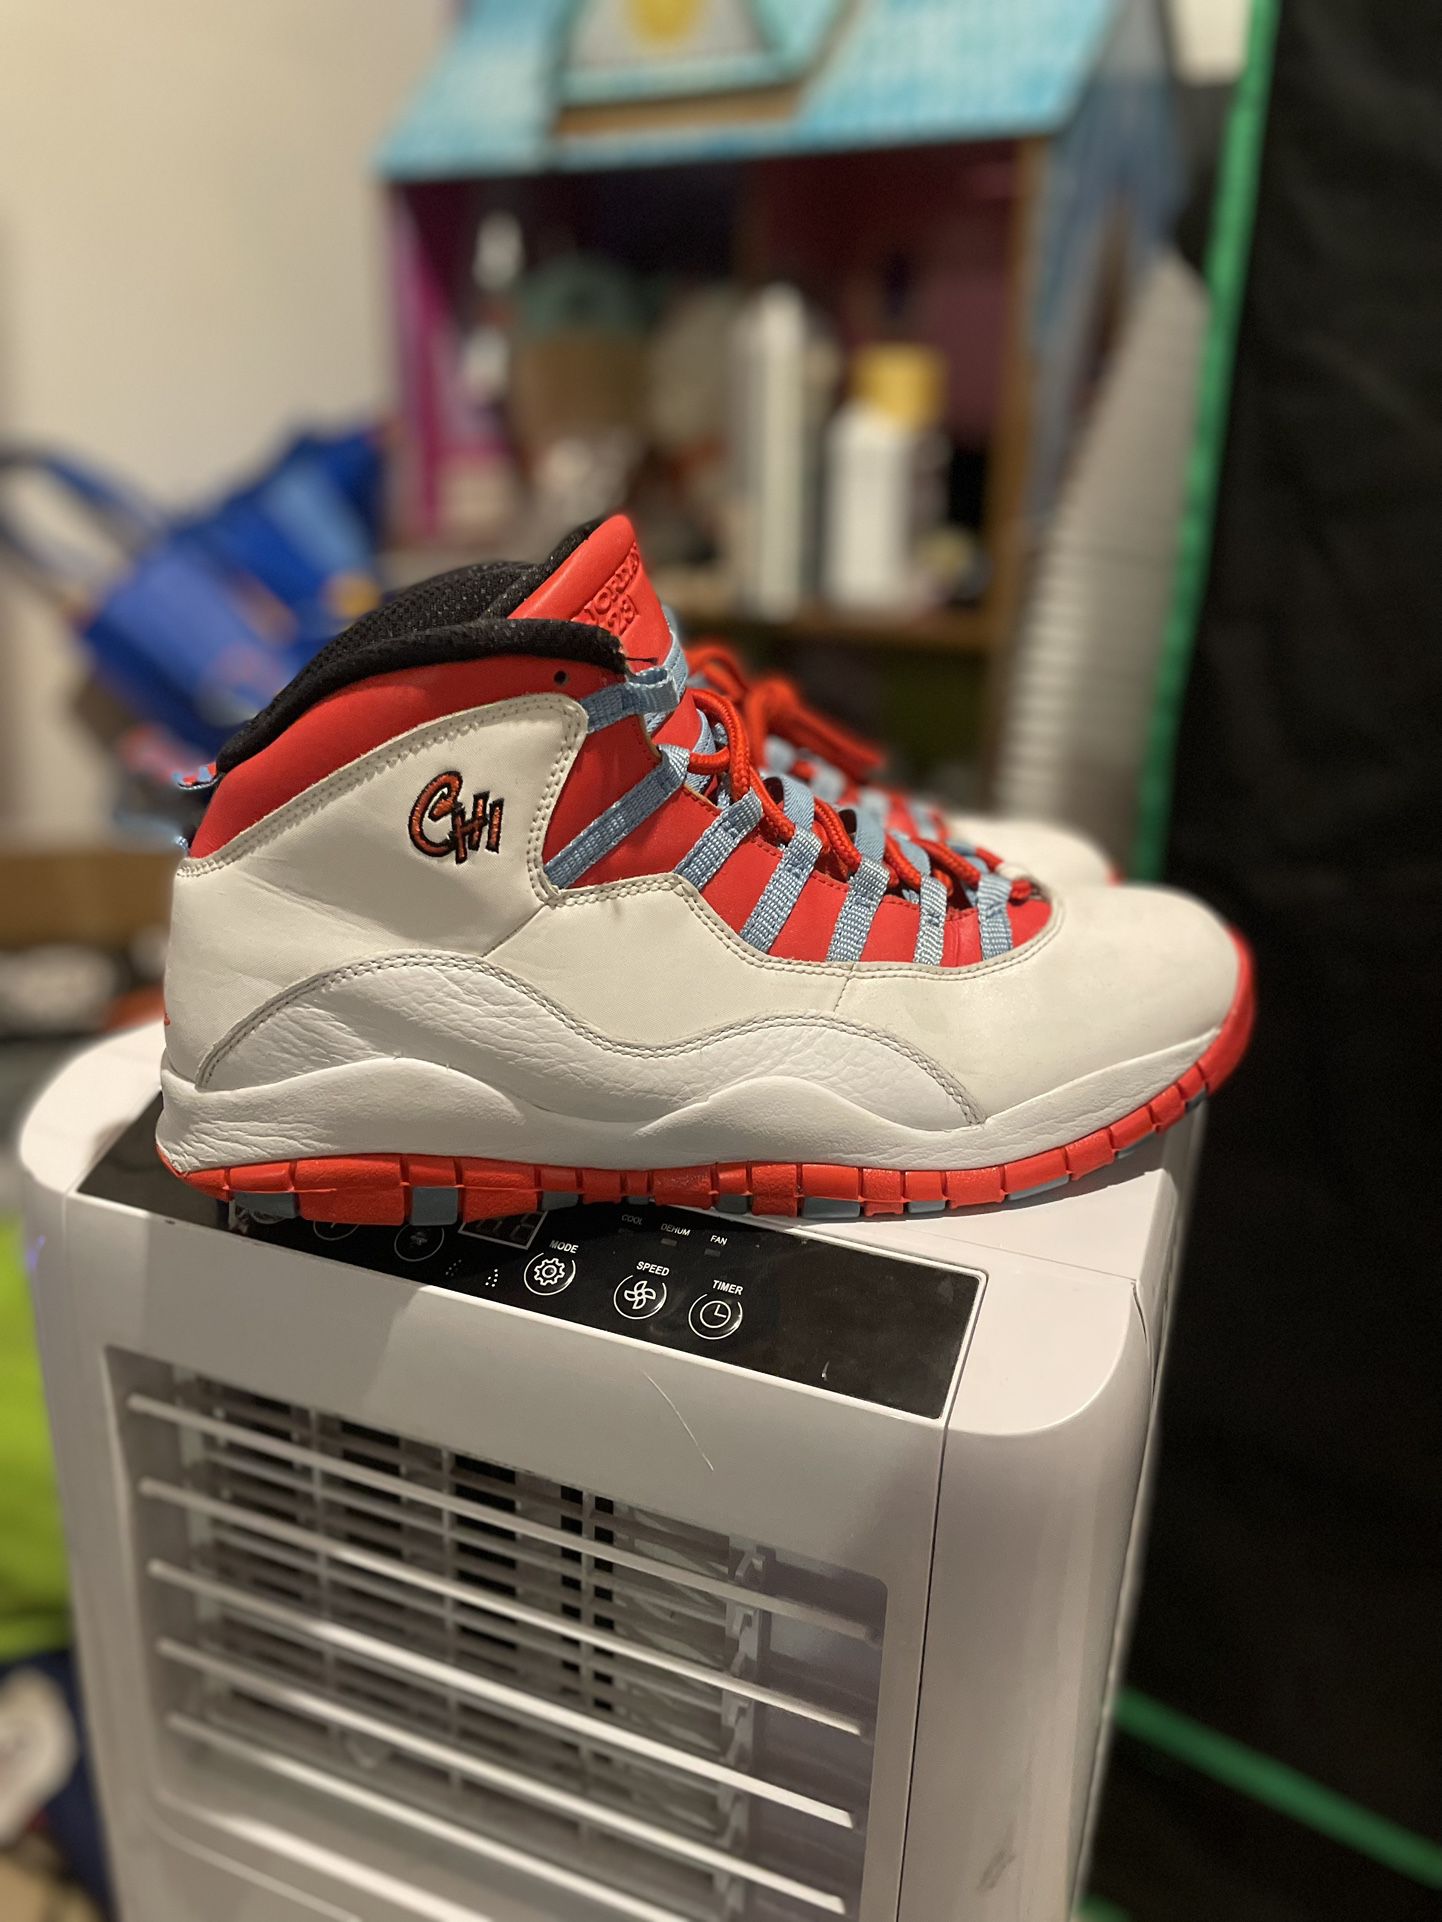 Air Jordan 10s Size 11